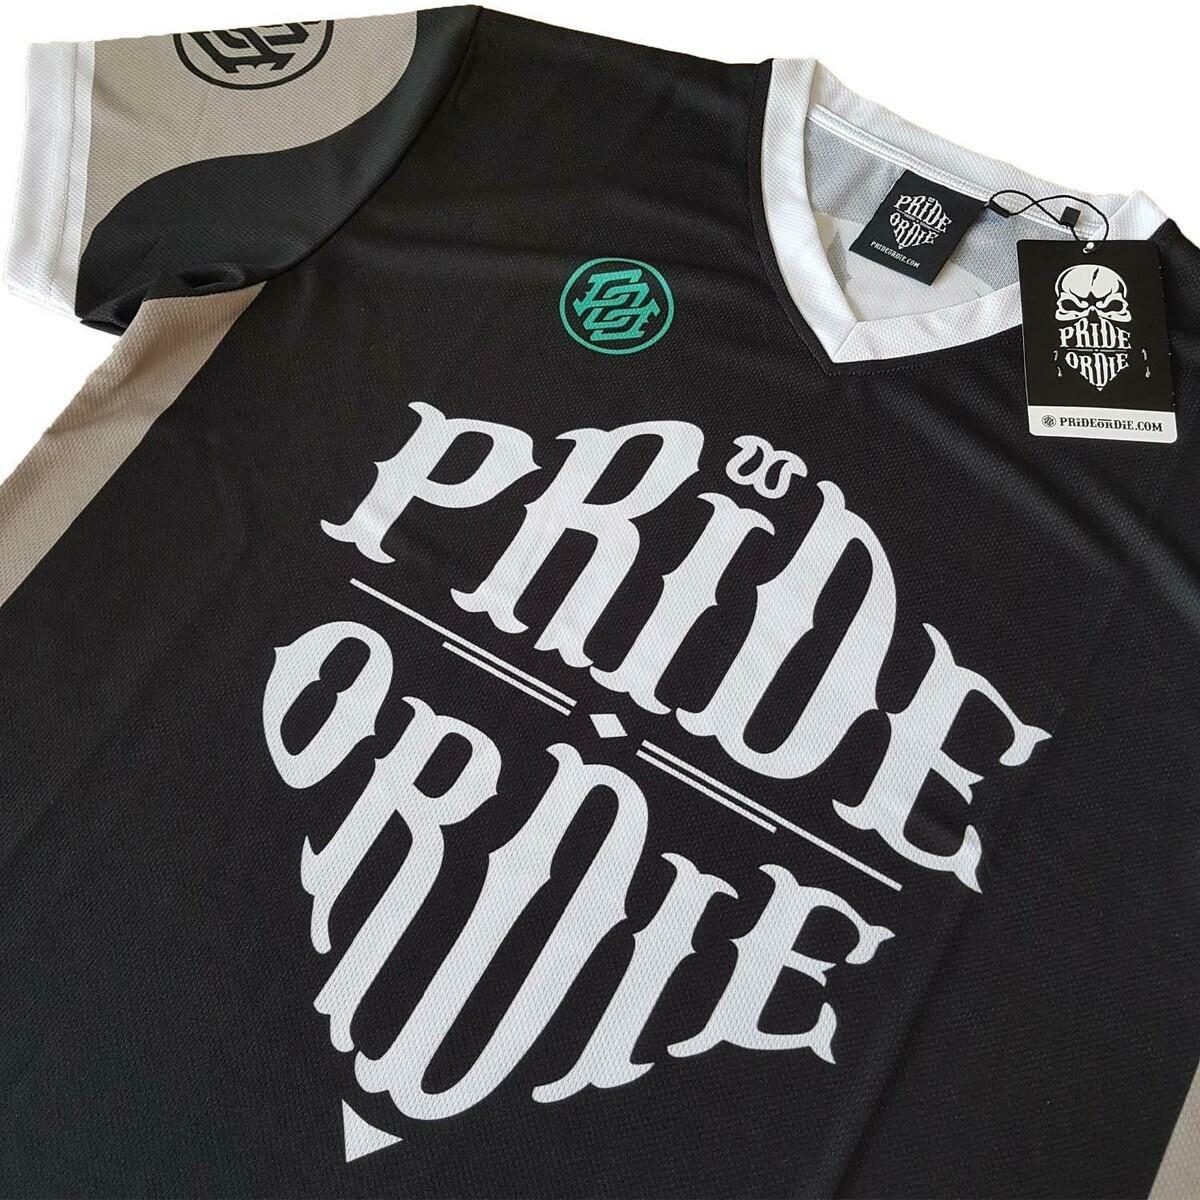 Pride or Die Reckless 05 All Sport T-Shirt TPOD003